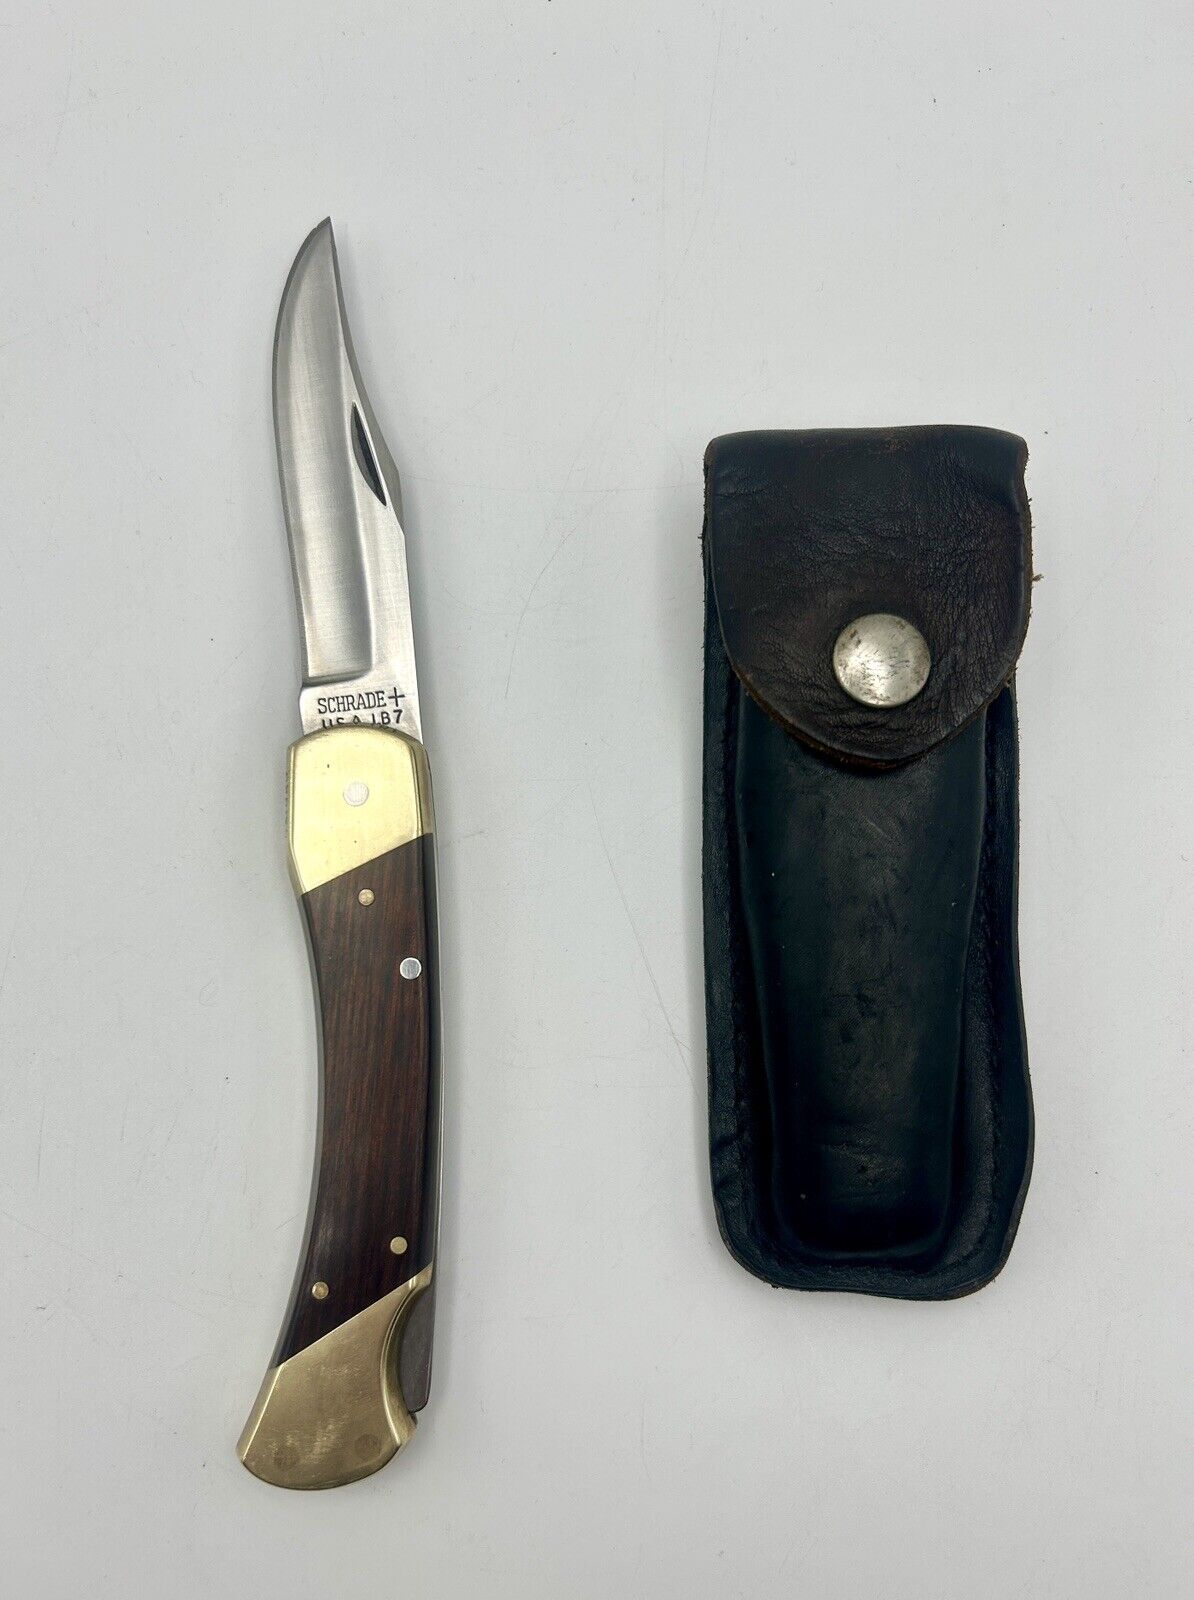 1979 SCHRADE+ U.S.A. LB7 4 PIN LOCKBACK KNIFE WITH ORIGINAL SHEATH